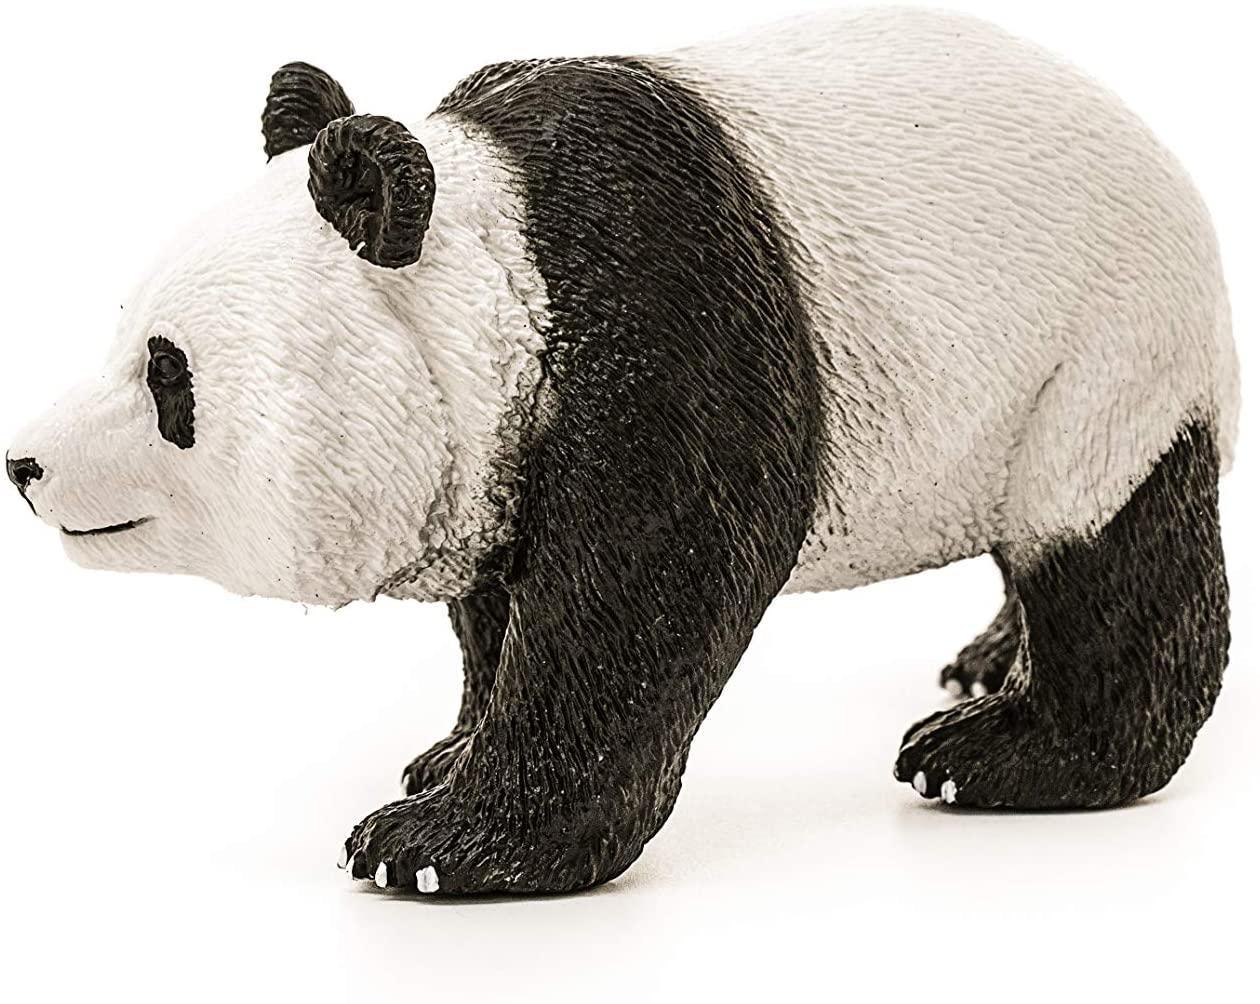 Schleich Wild Life Panda Male Toy Figurine - image 3 of 4